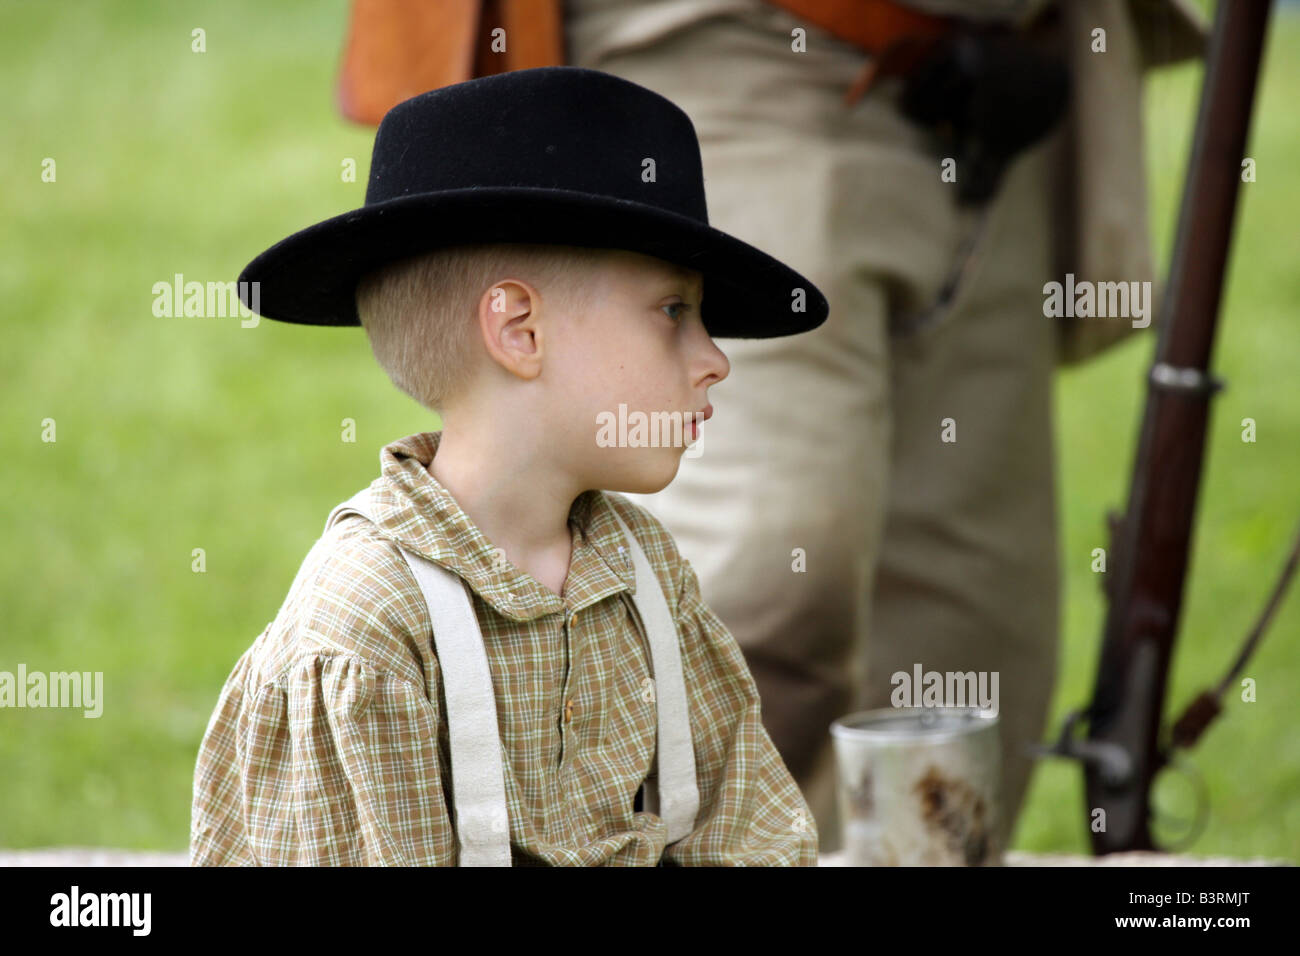 A boy in an 1850s outfit at a Civil War Encampment Reenactment Stock Photo